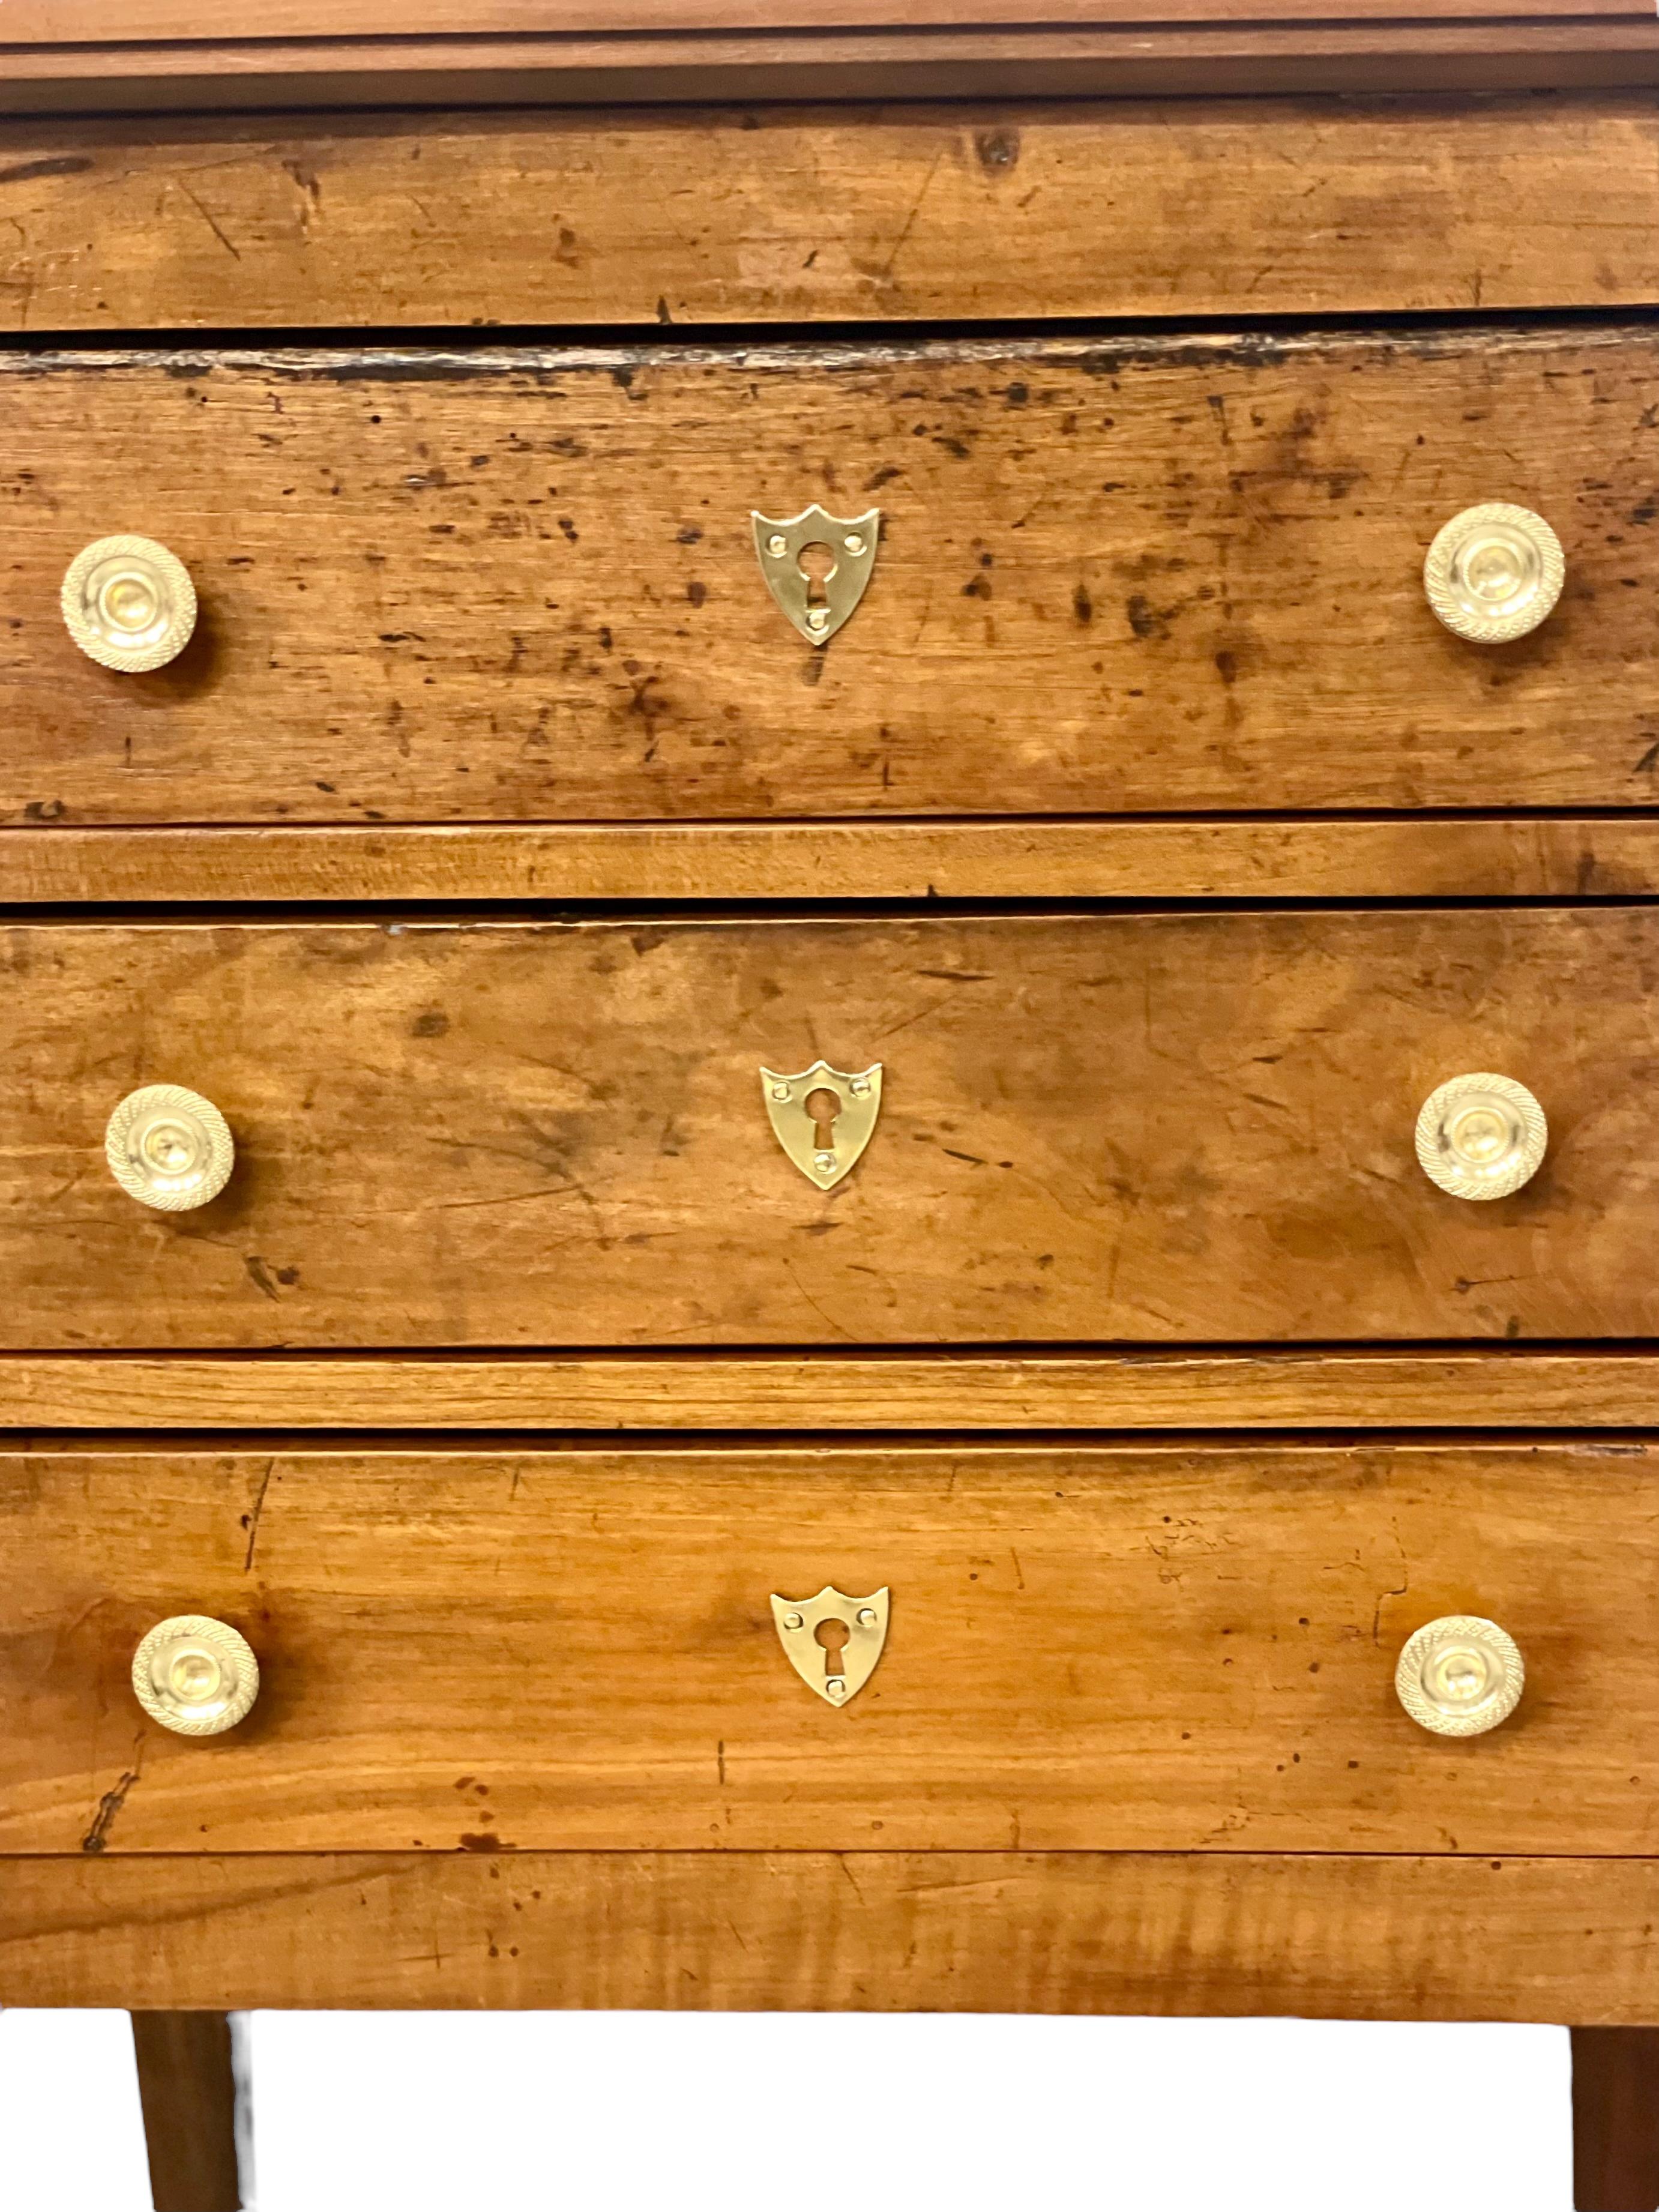 19th century drawer pulls